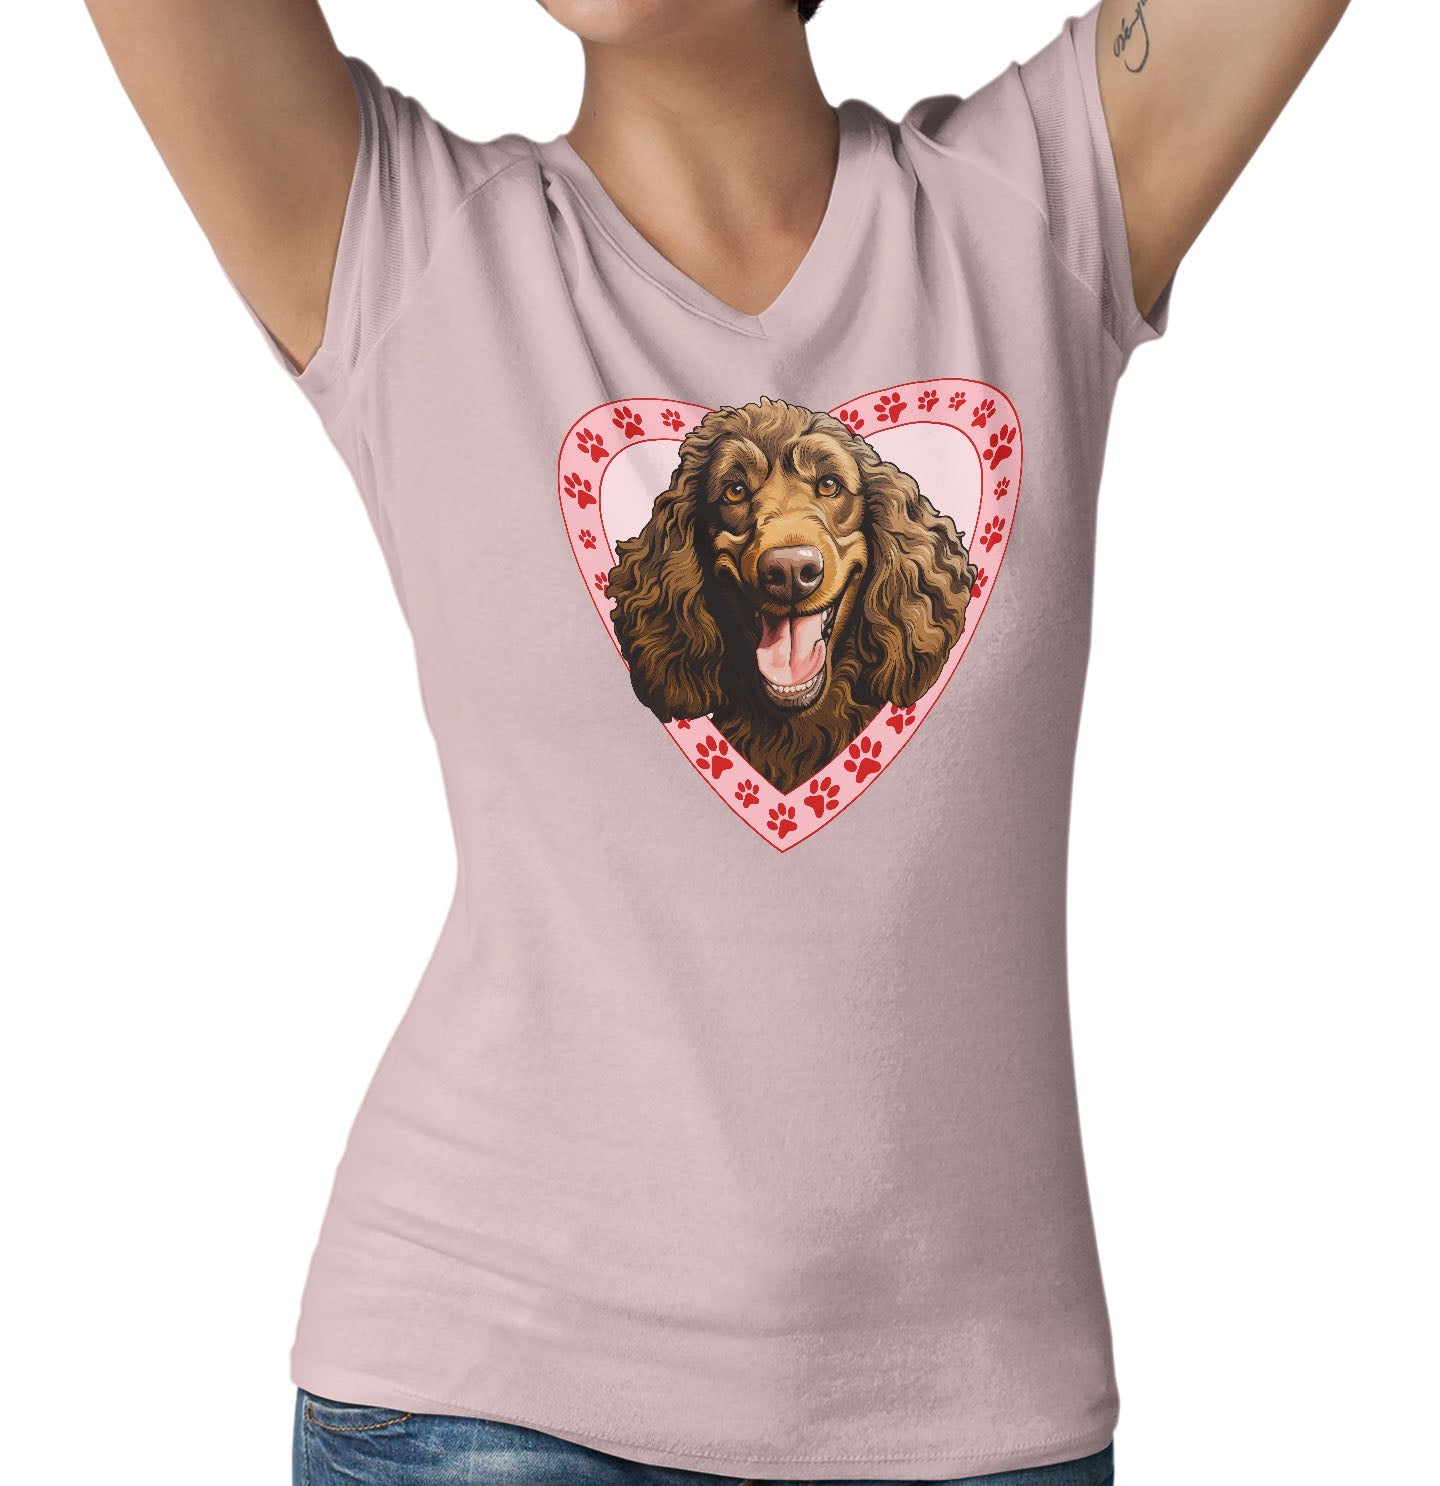 Irish Water Spaniel Illustration In Heart - Women's V-Neck T-Shirt